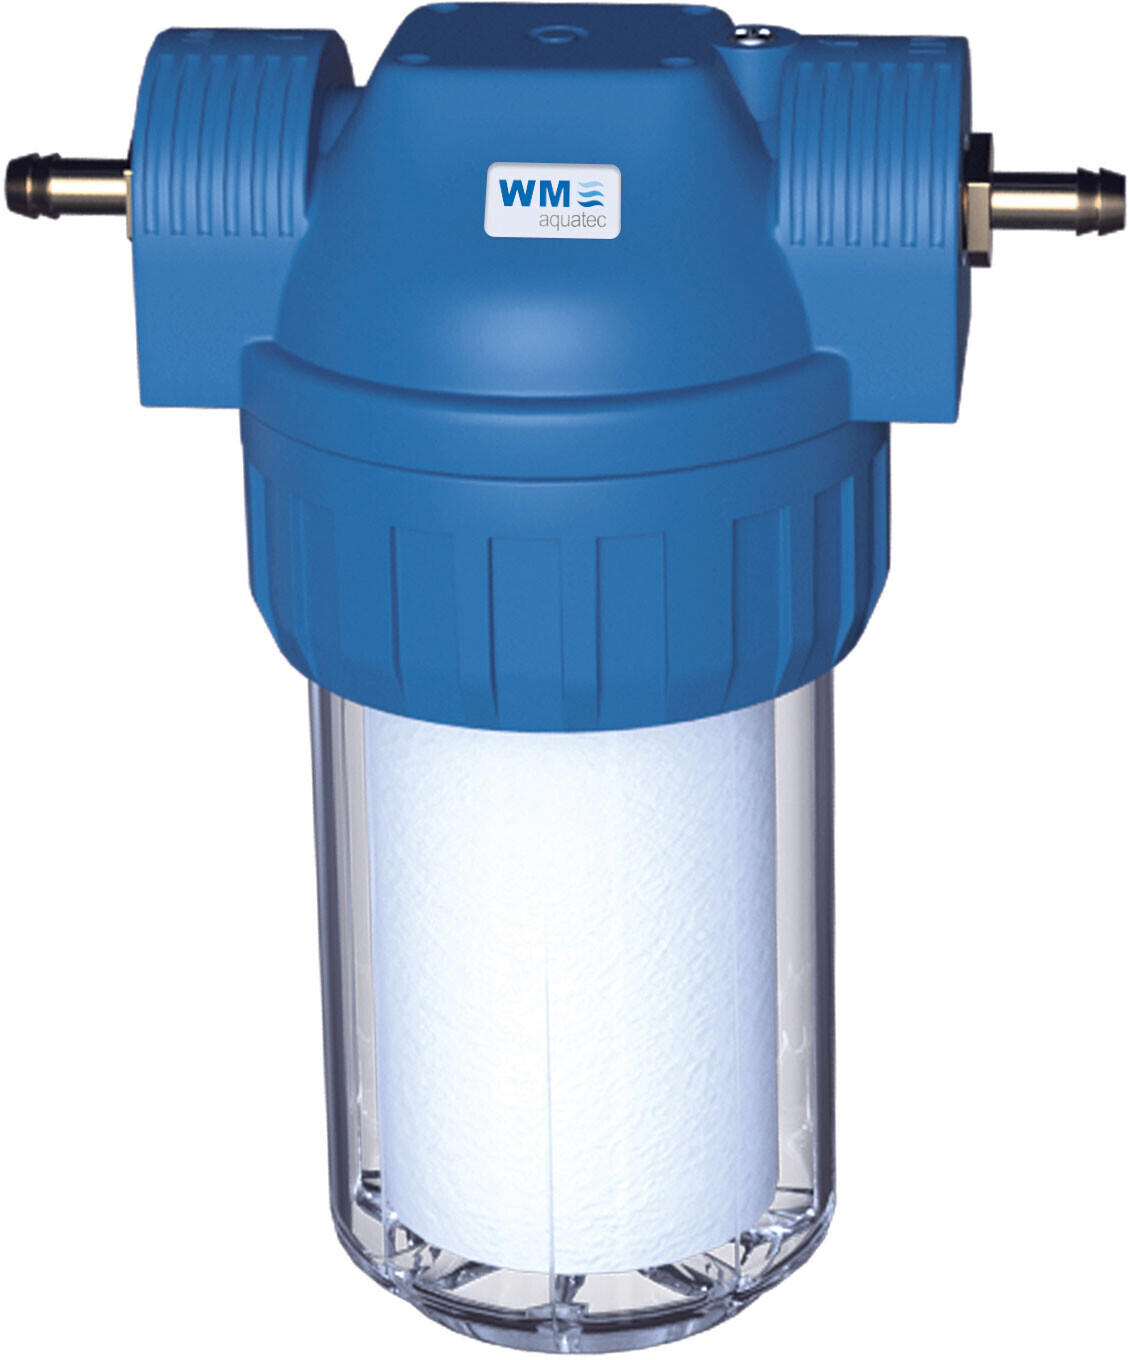 WM aquatec Water Filter Set Mobile Edition